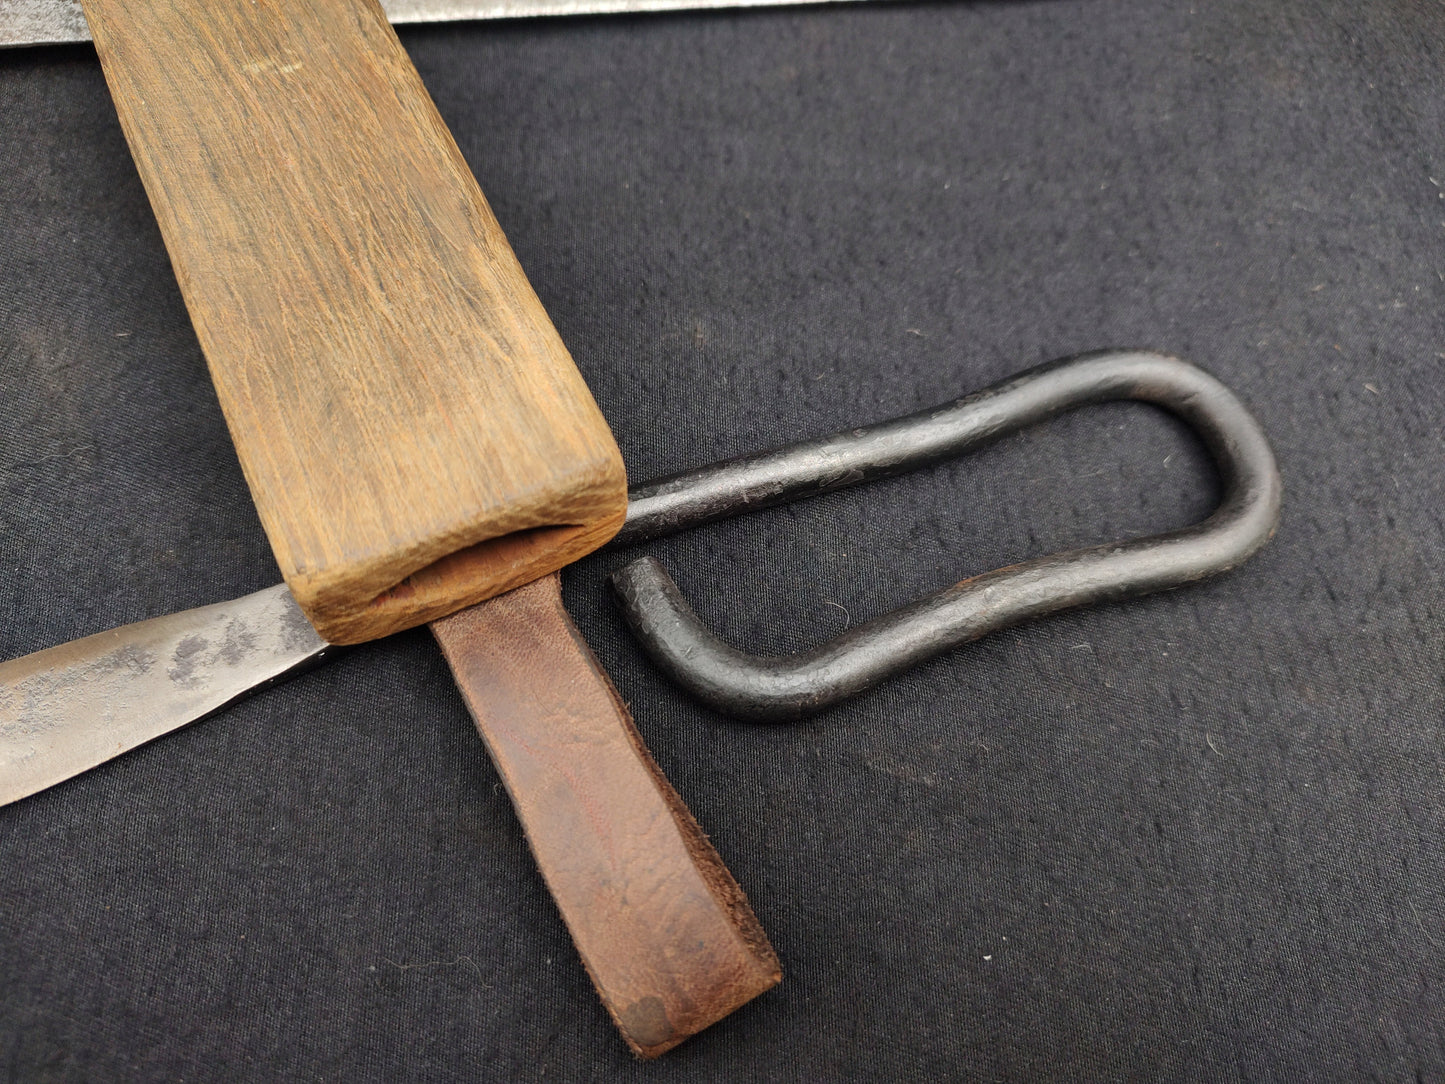 French nail Ww1 dagger trench art battle knife